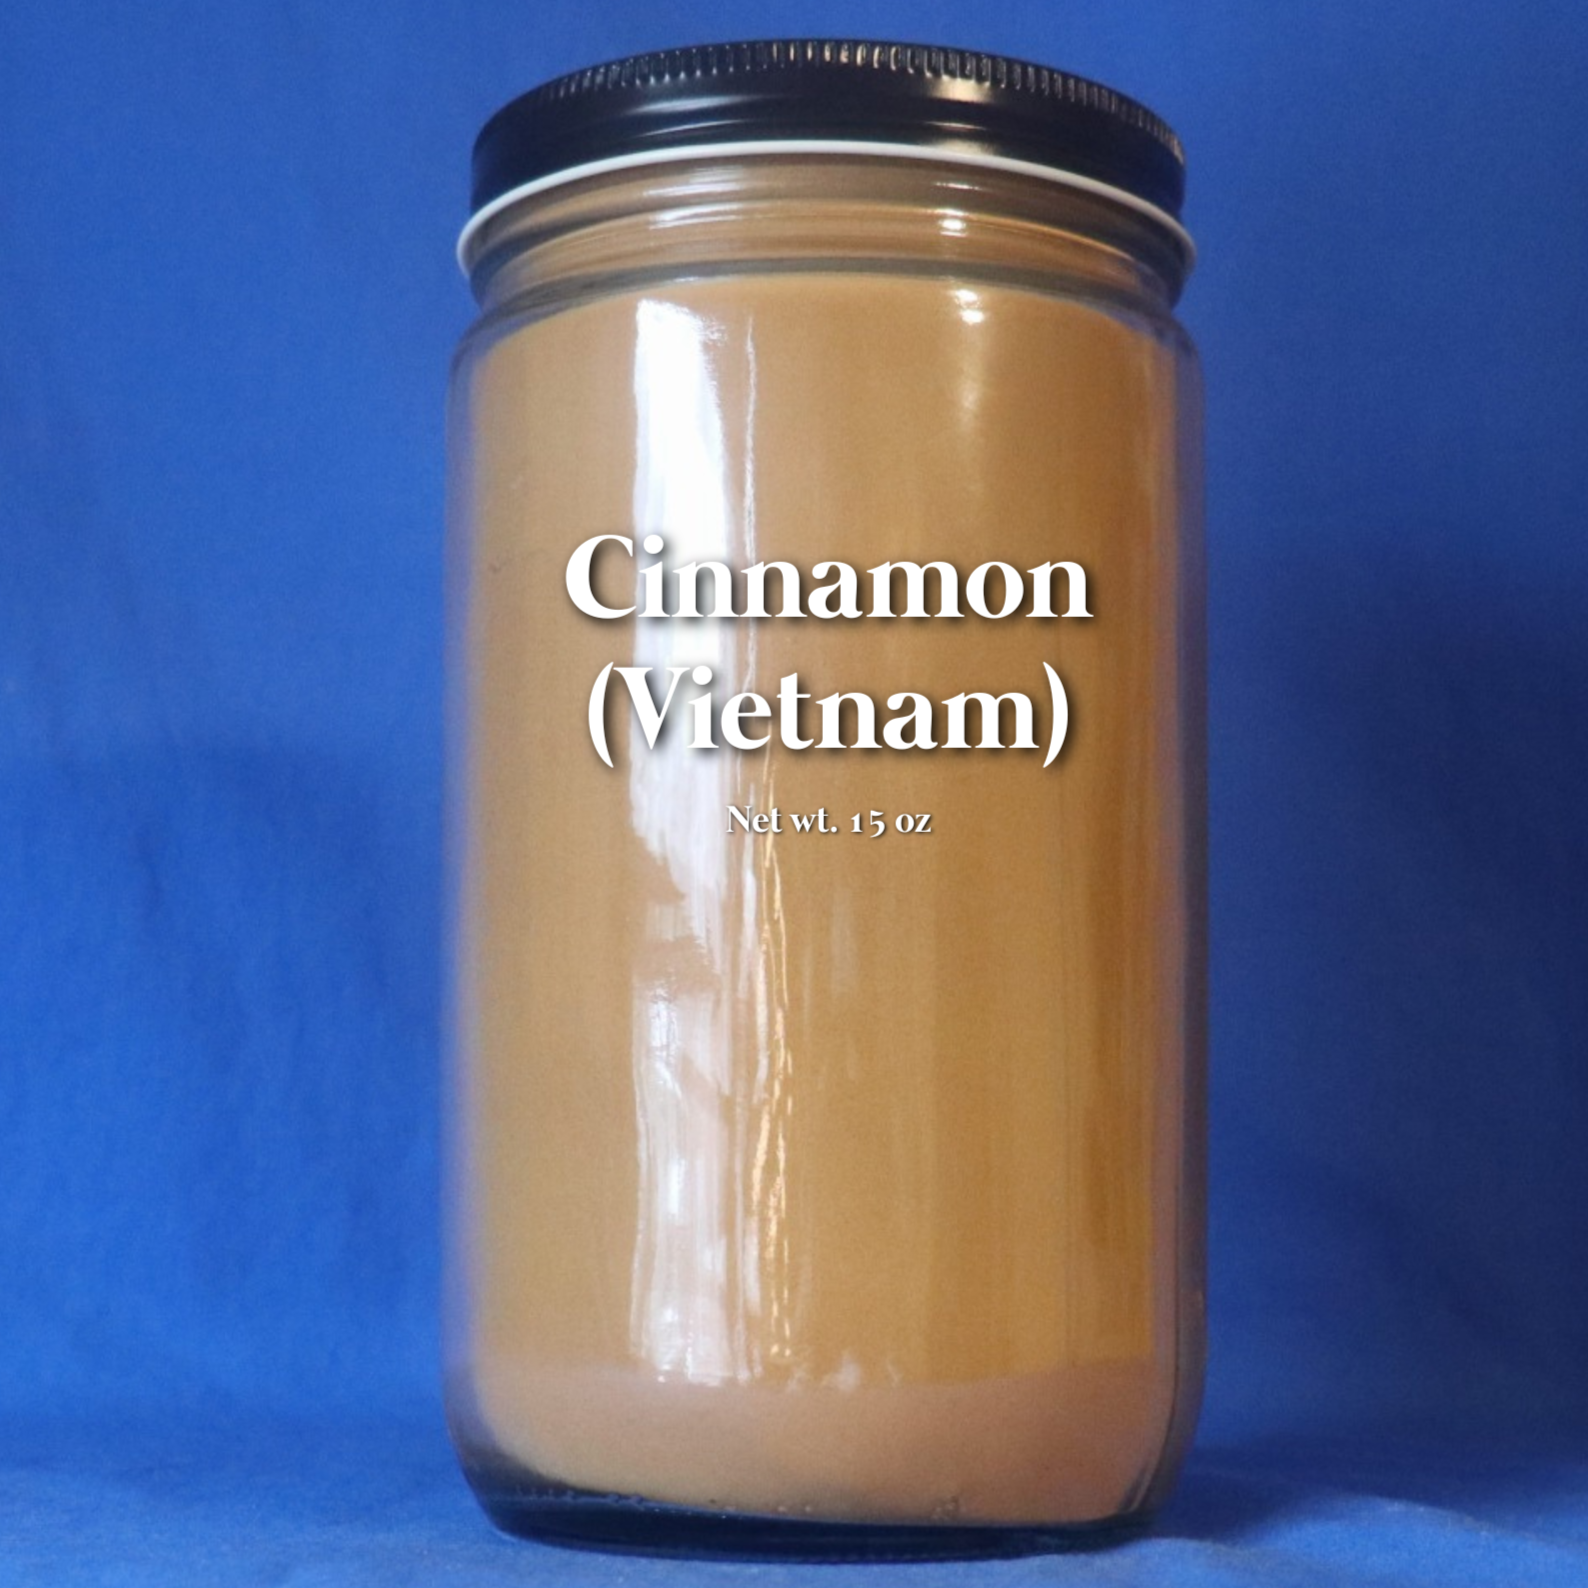 Cinnamon (Vietnam)